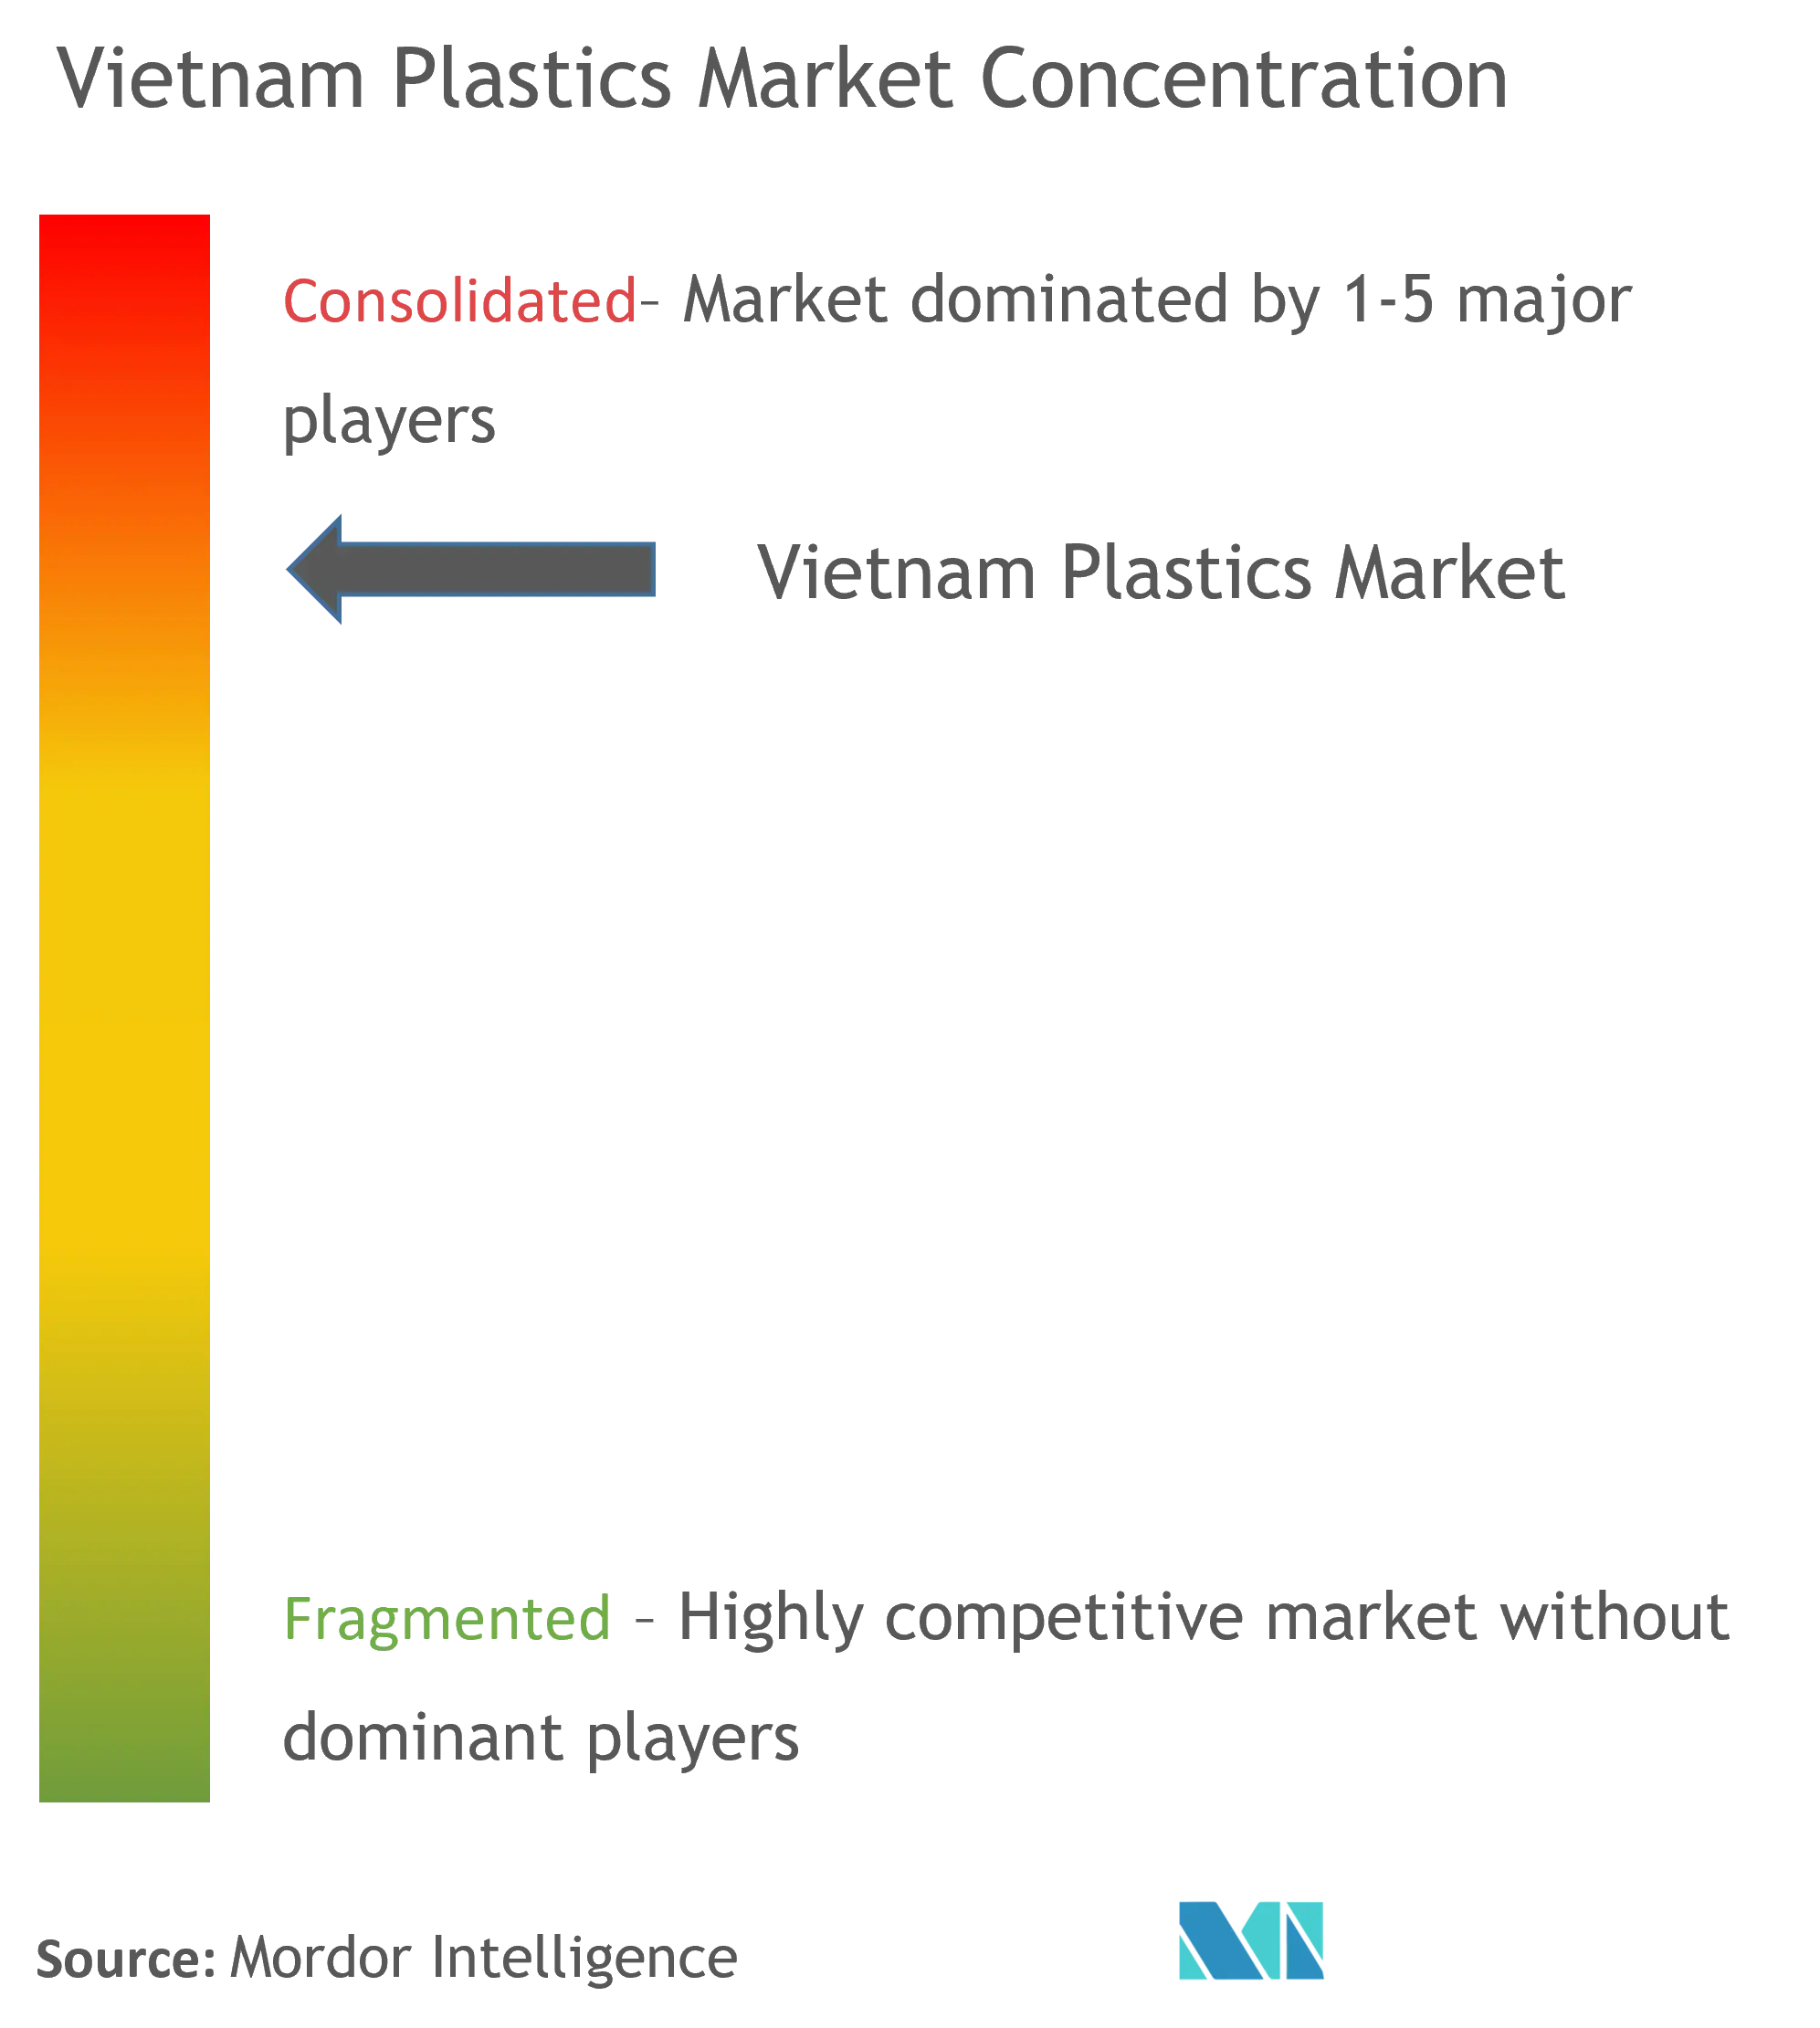 Vietnam Plastics Market Concentration